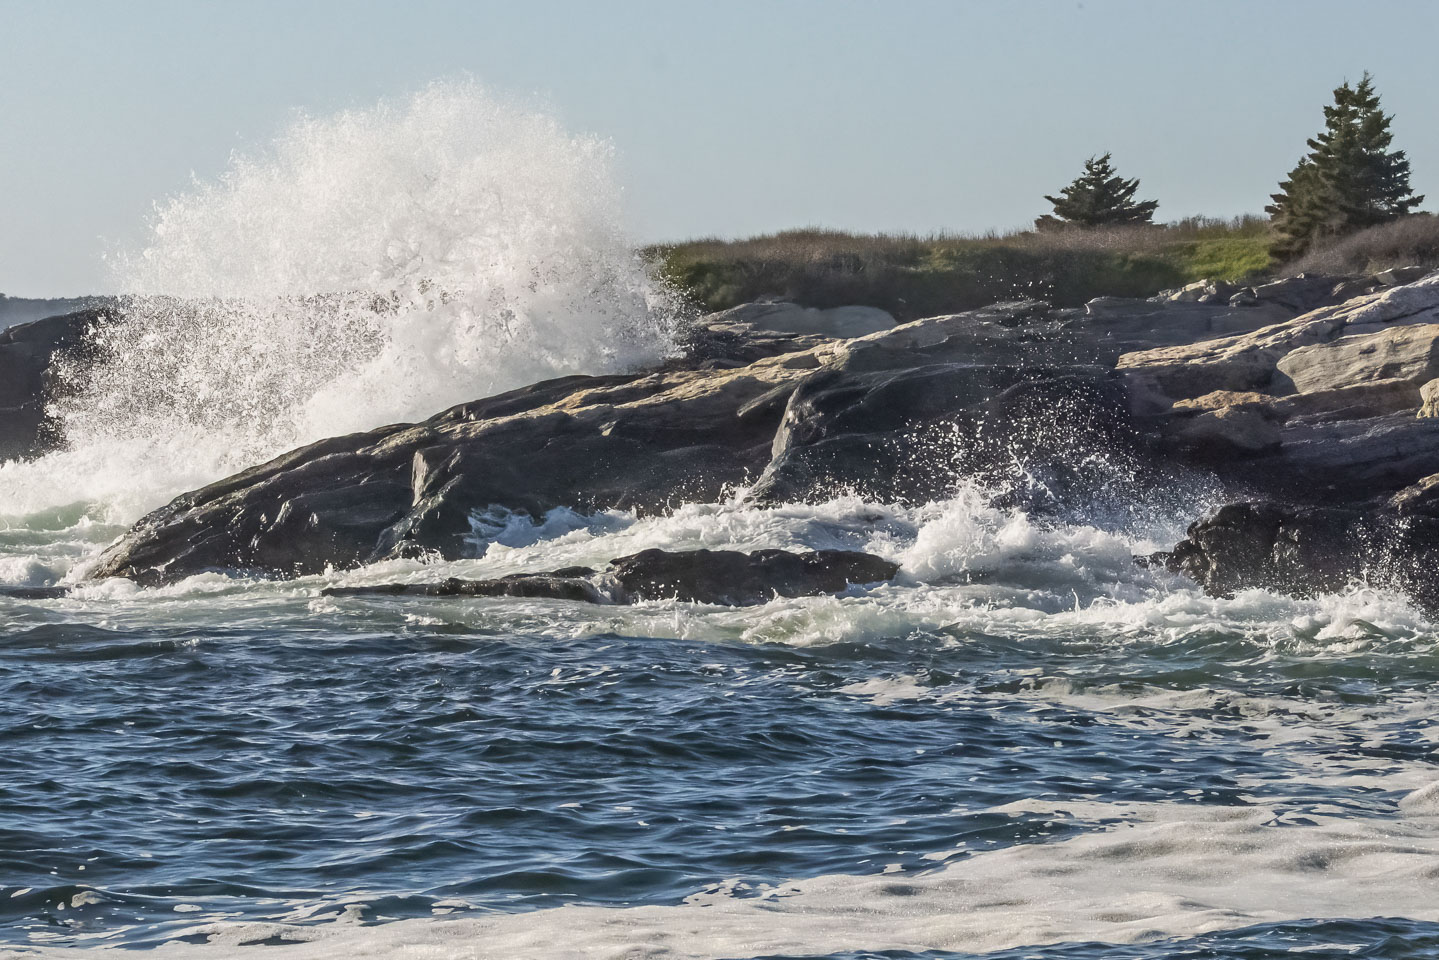 A wave crashing against rocks